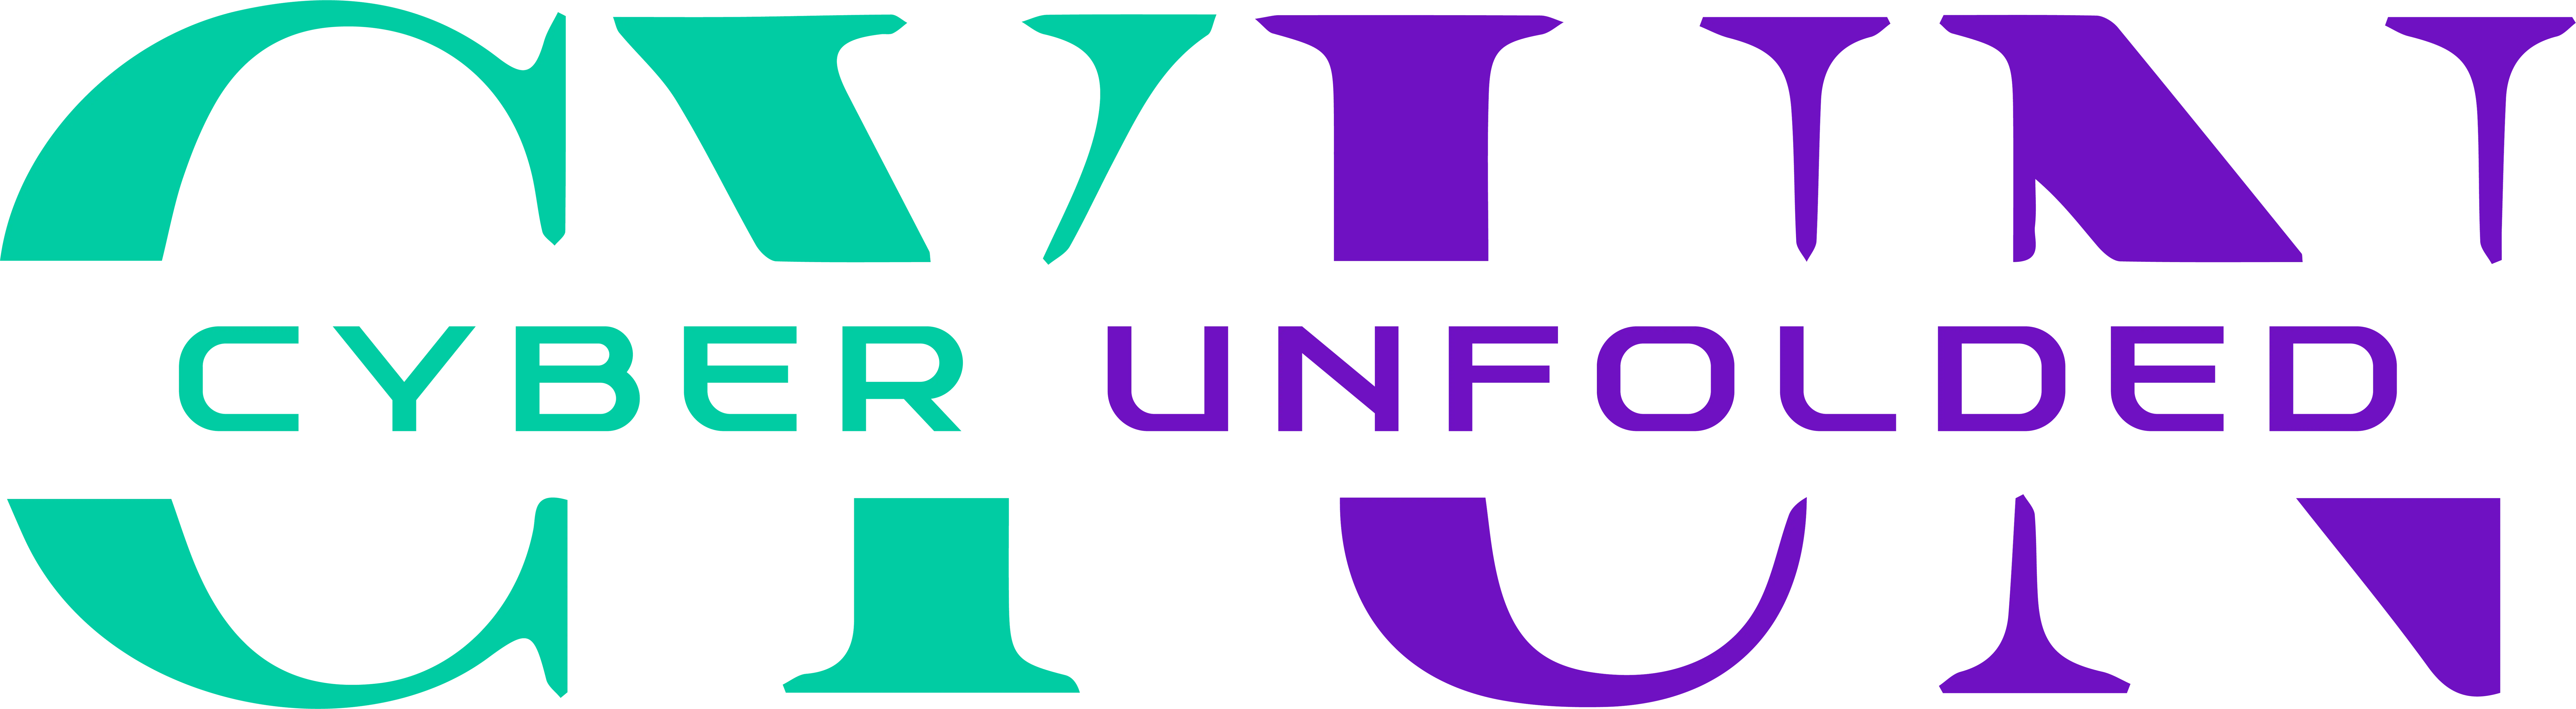 Cyber Unfolded Light Logo